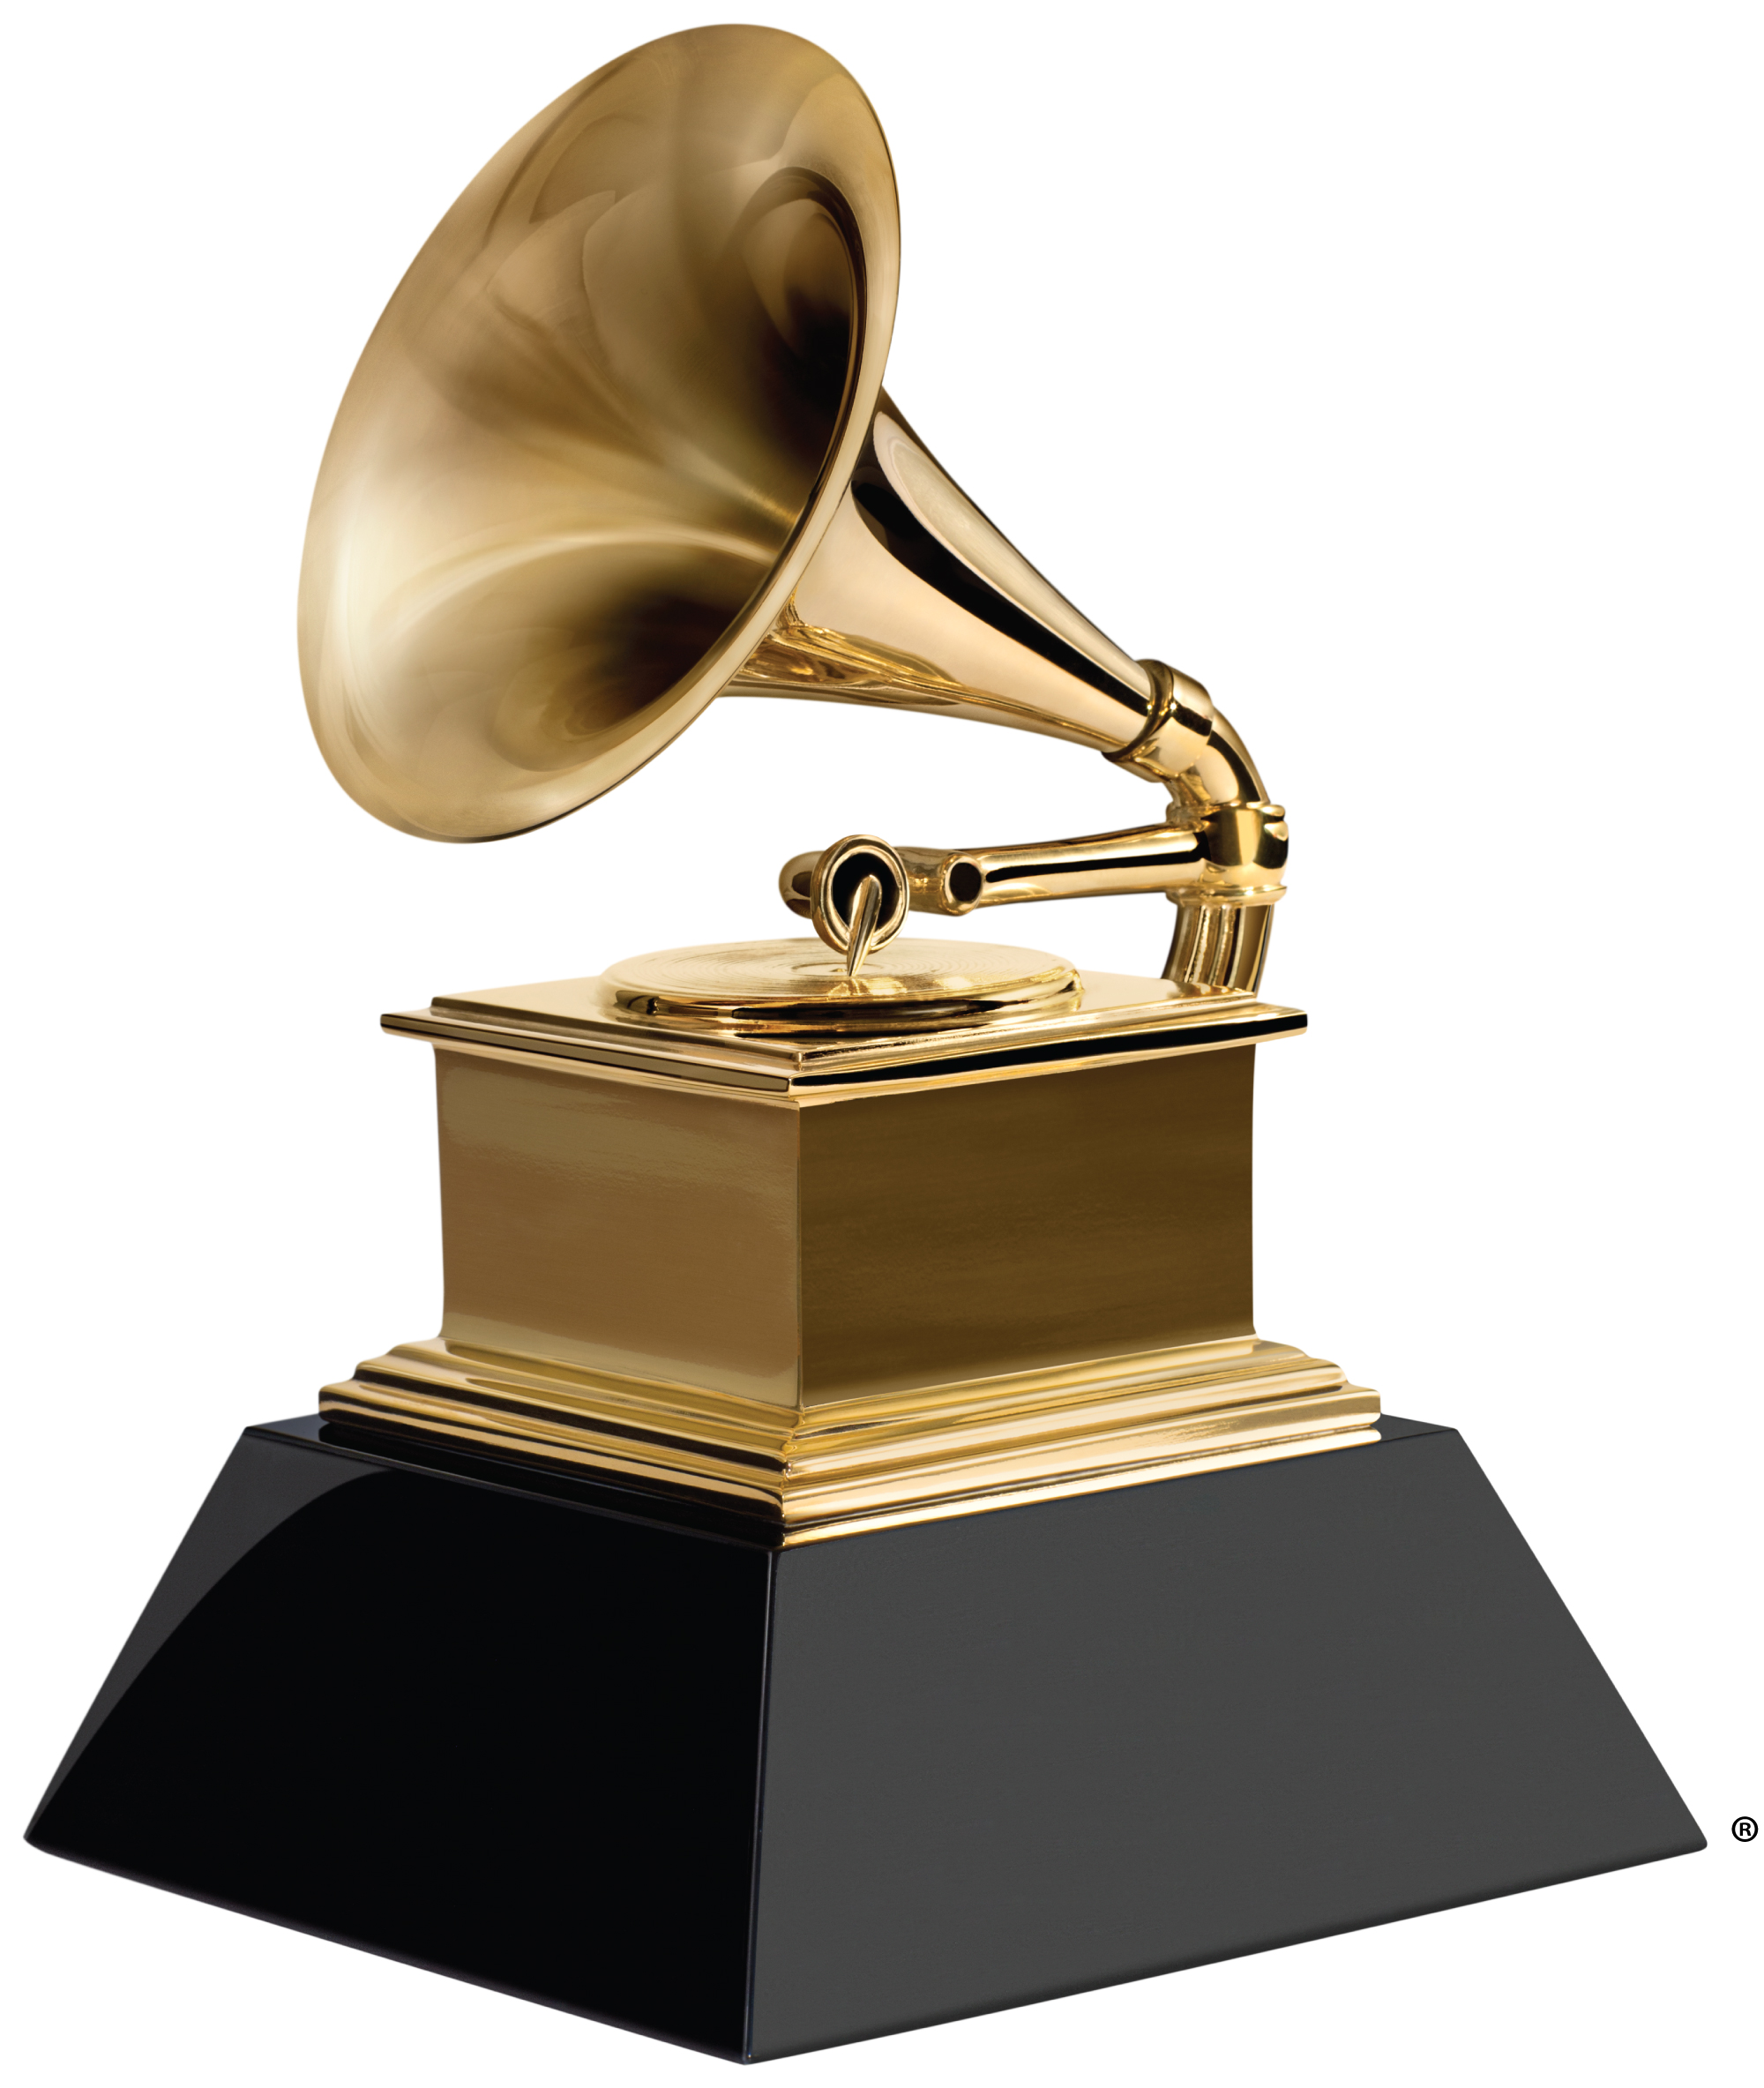 Imagem do gramofone dourado entregue aos vencedores do Grammy